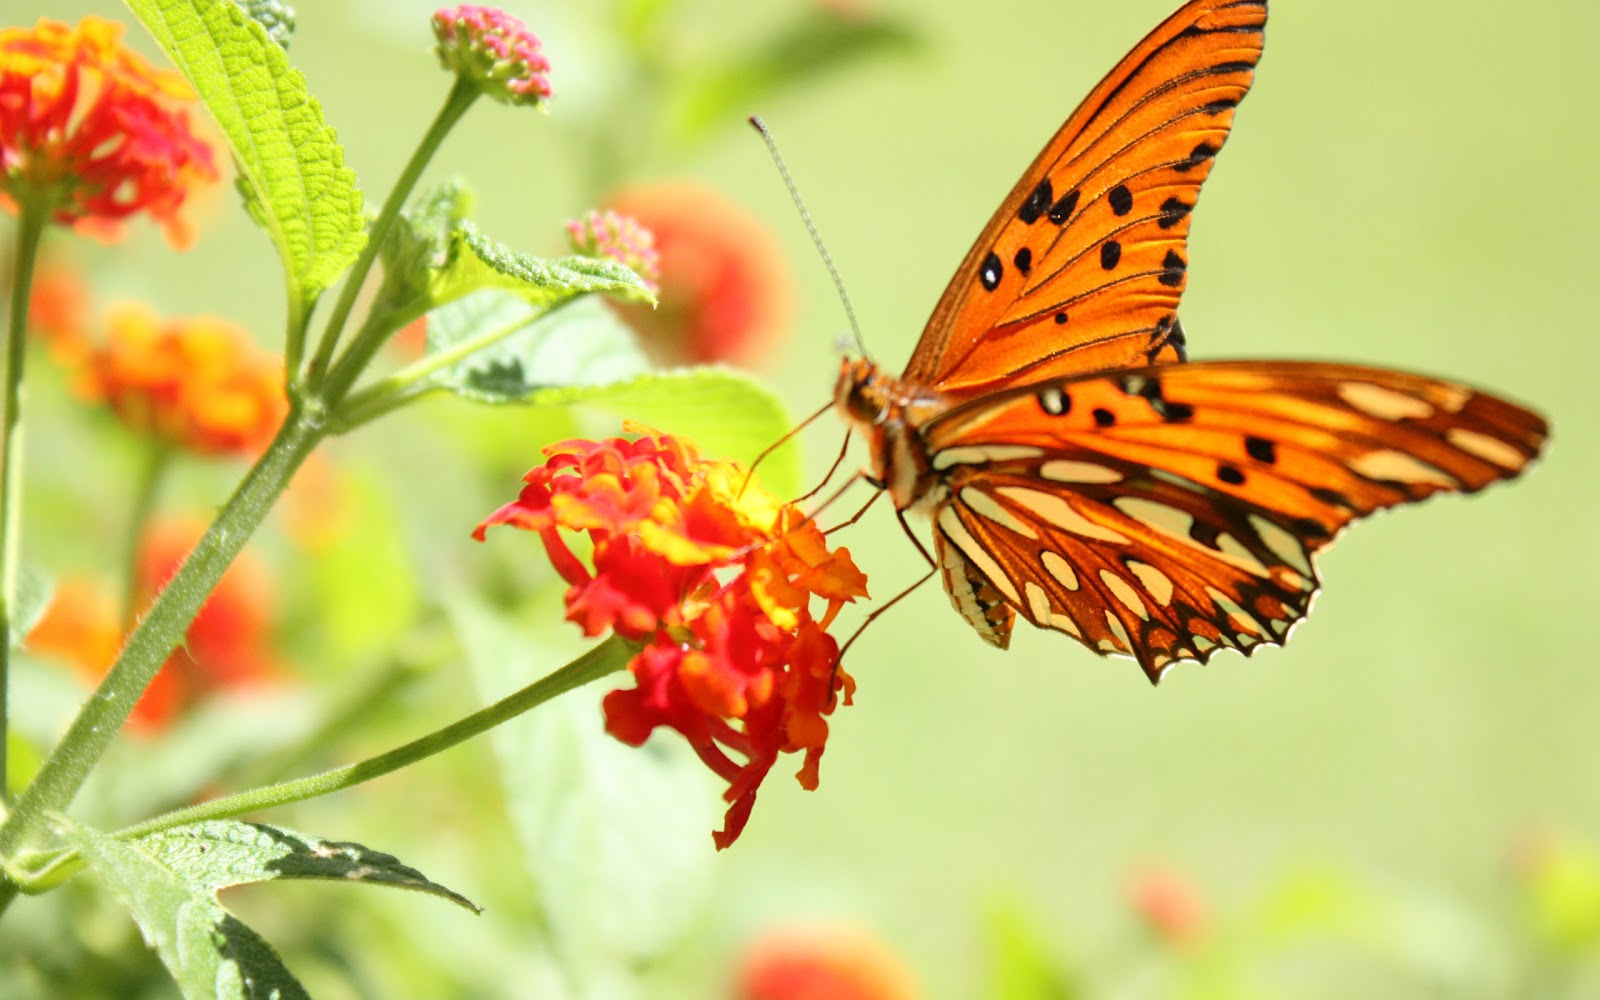 Butterfly on the flower HD wallpaper - 3D Nature Wallpaper